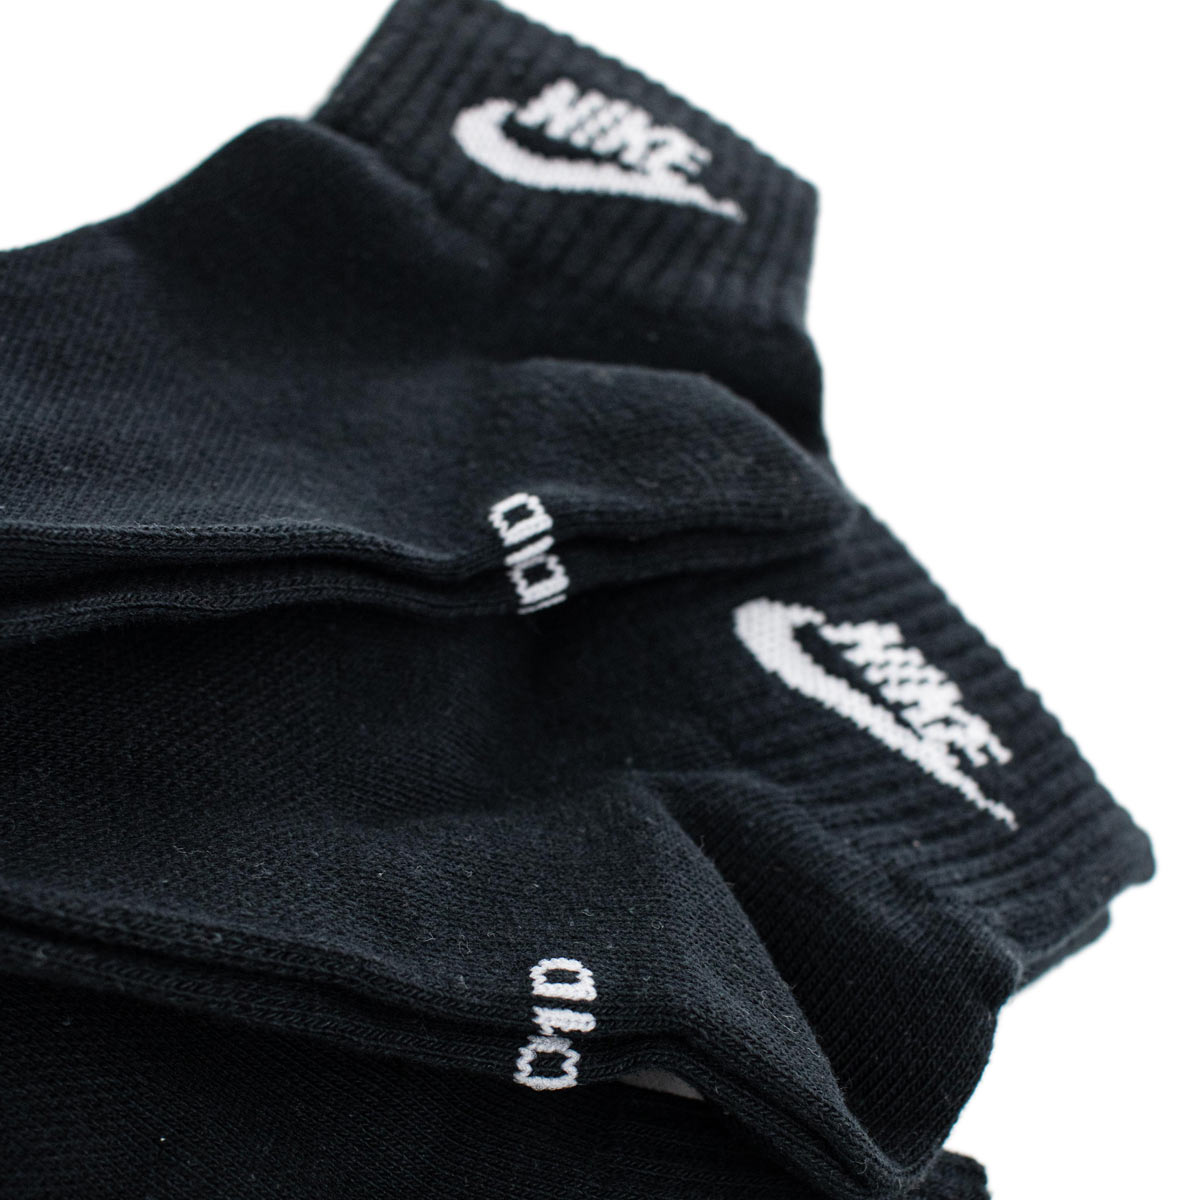 Nike Sportswear Everyday Essential Quarter Socken 3 Paar SK0110-010-